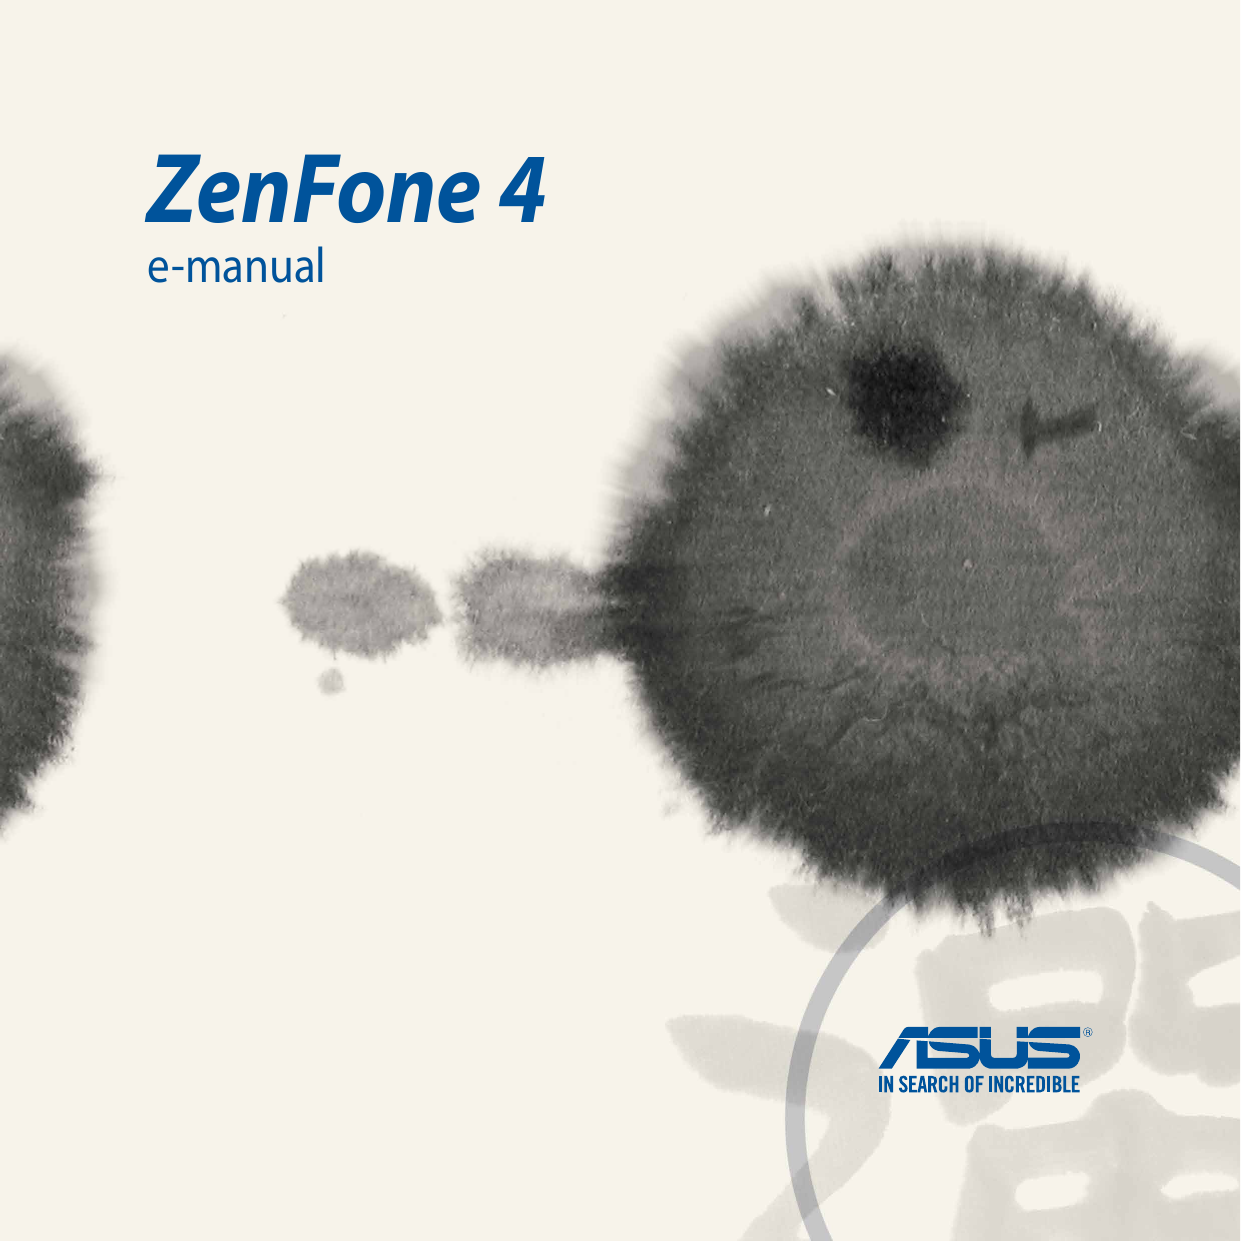 ZenFone 4e-manual